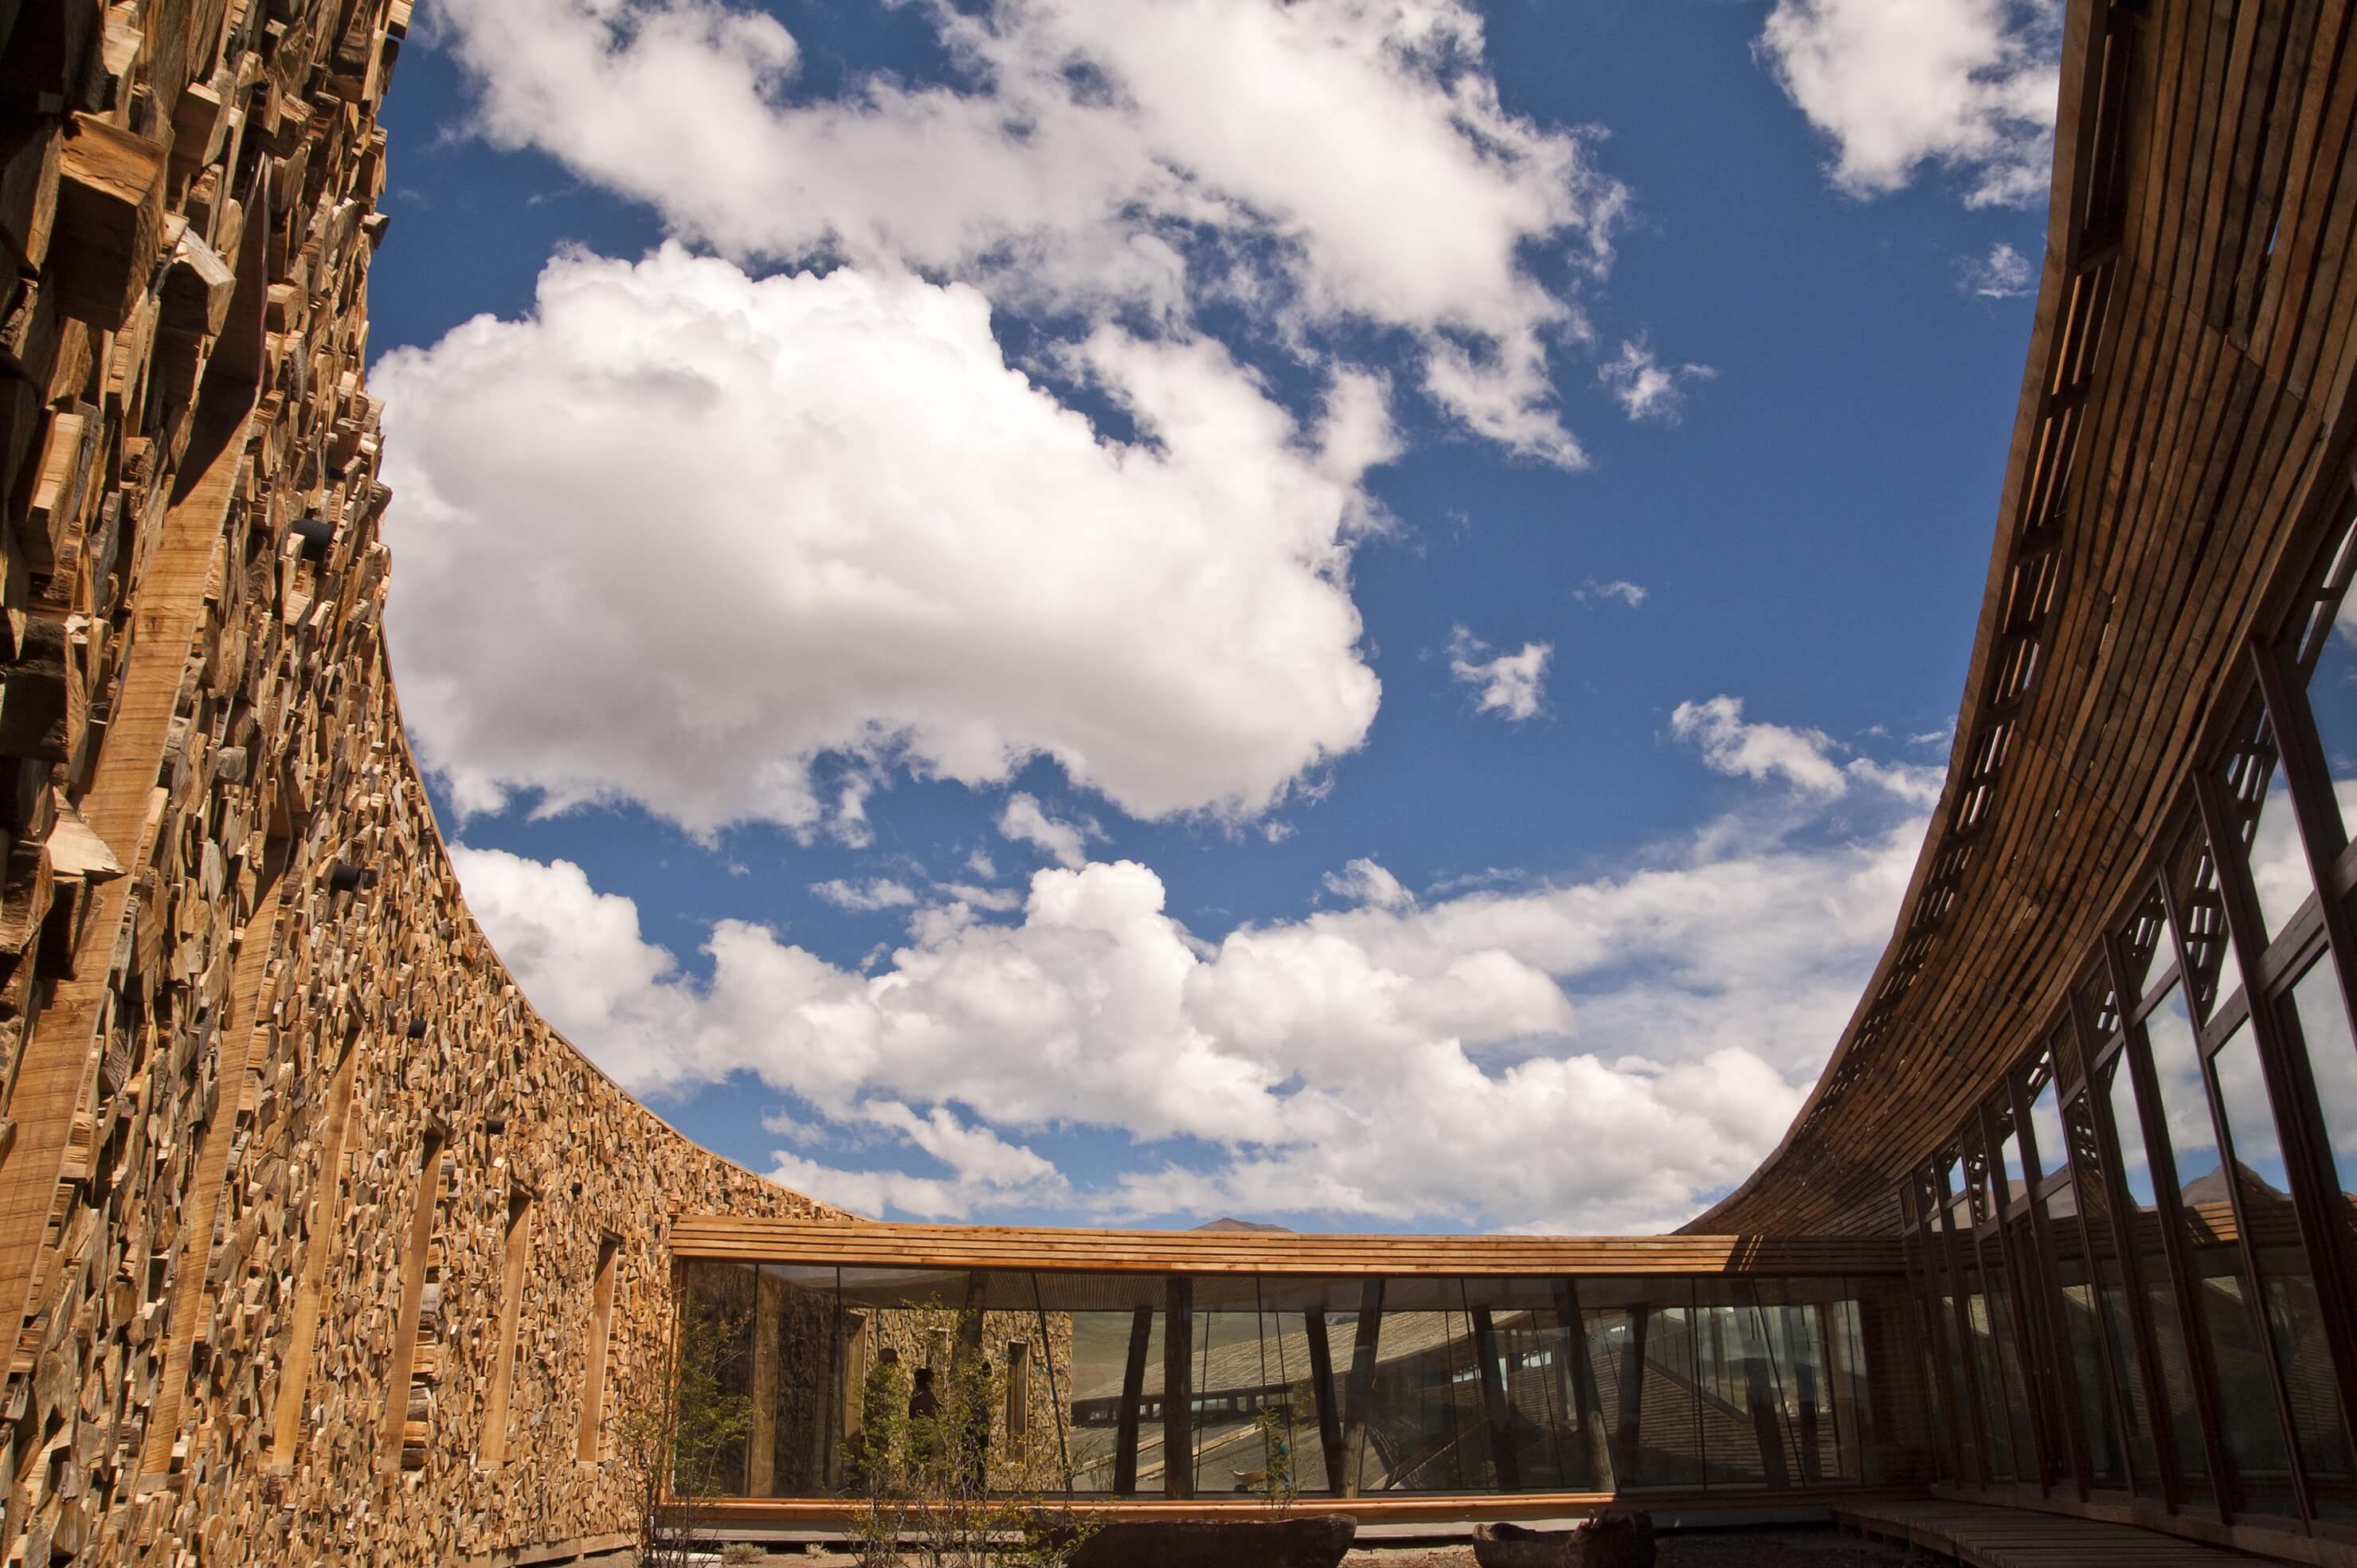 Hotel Tierra Patagonia by Cazú Zegers Arquitectura